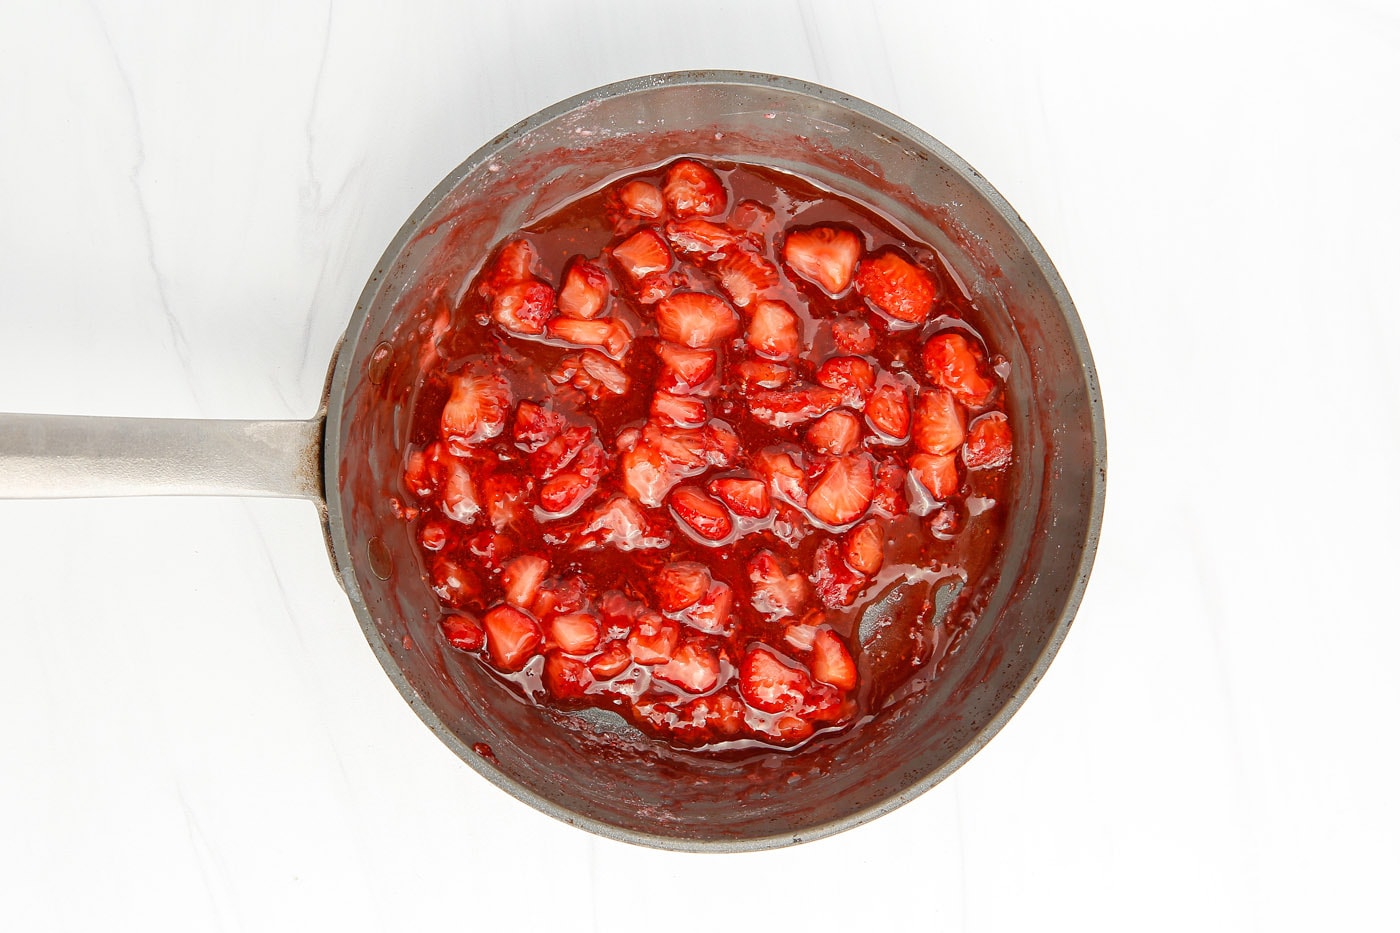 strawberry sauce in a saucepan